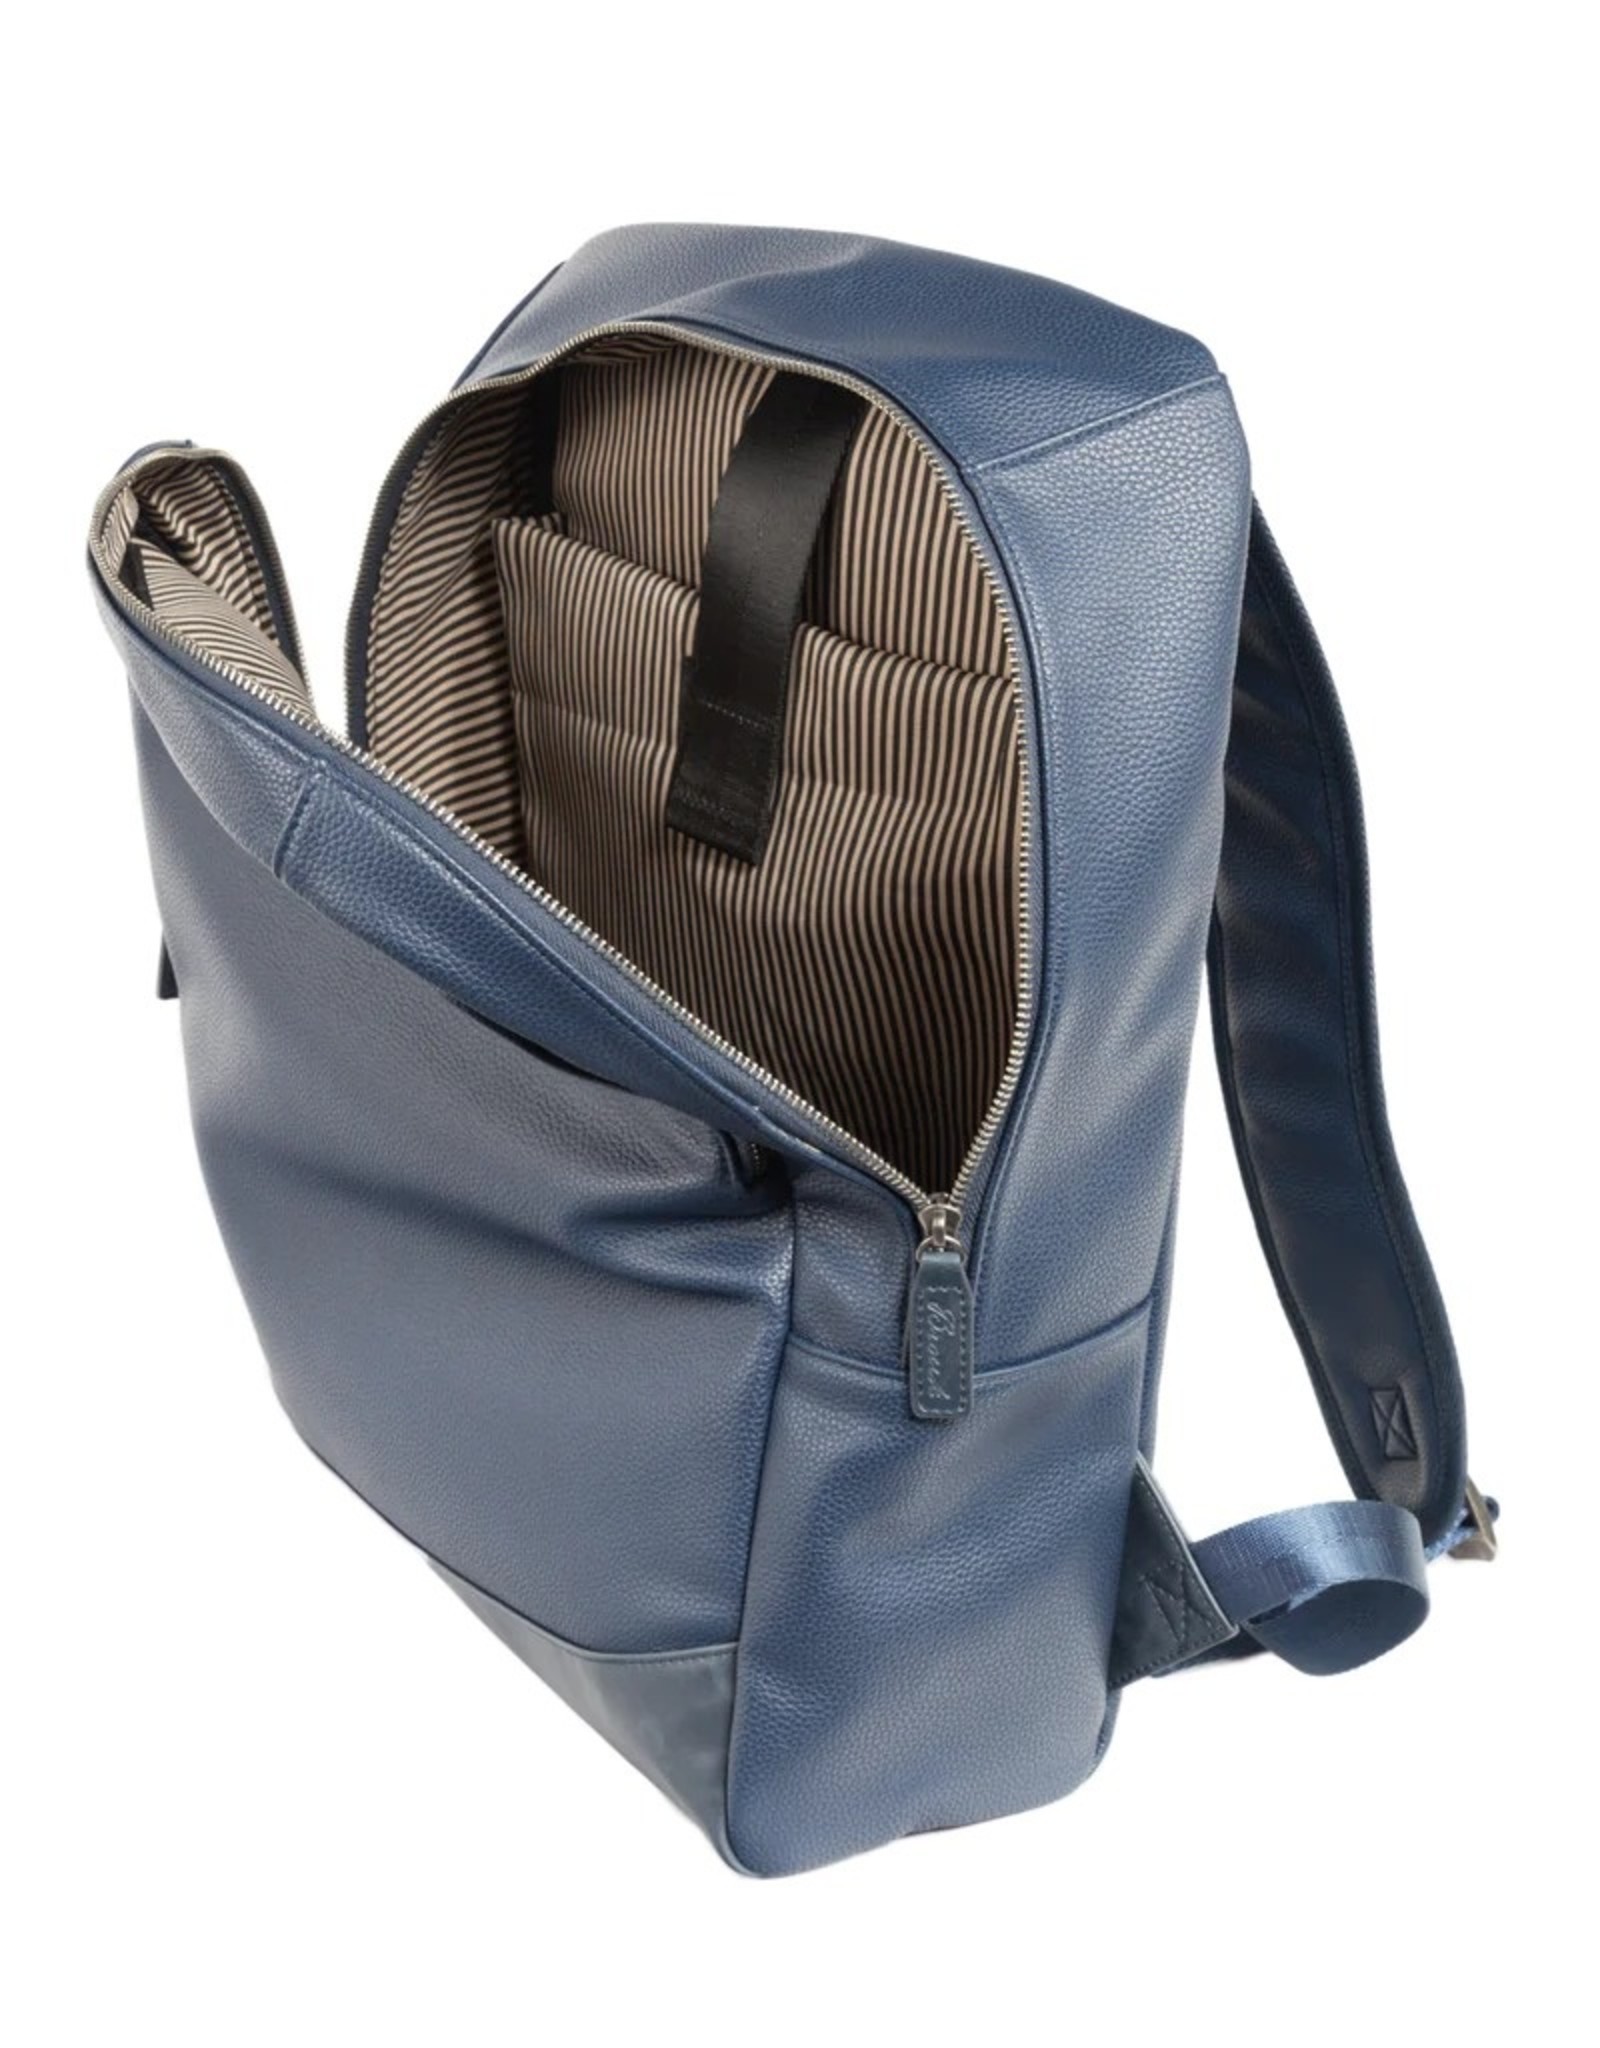 Brouk and Co. Davidson Backpack, Blue